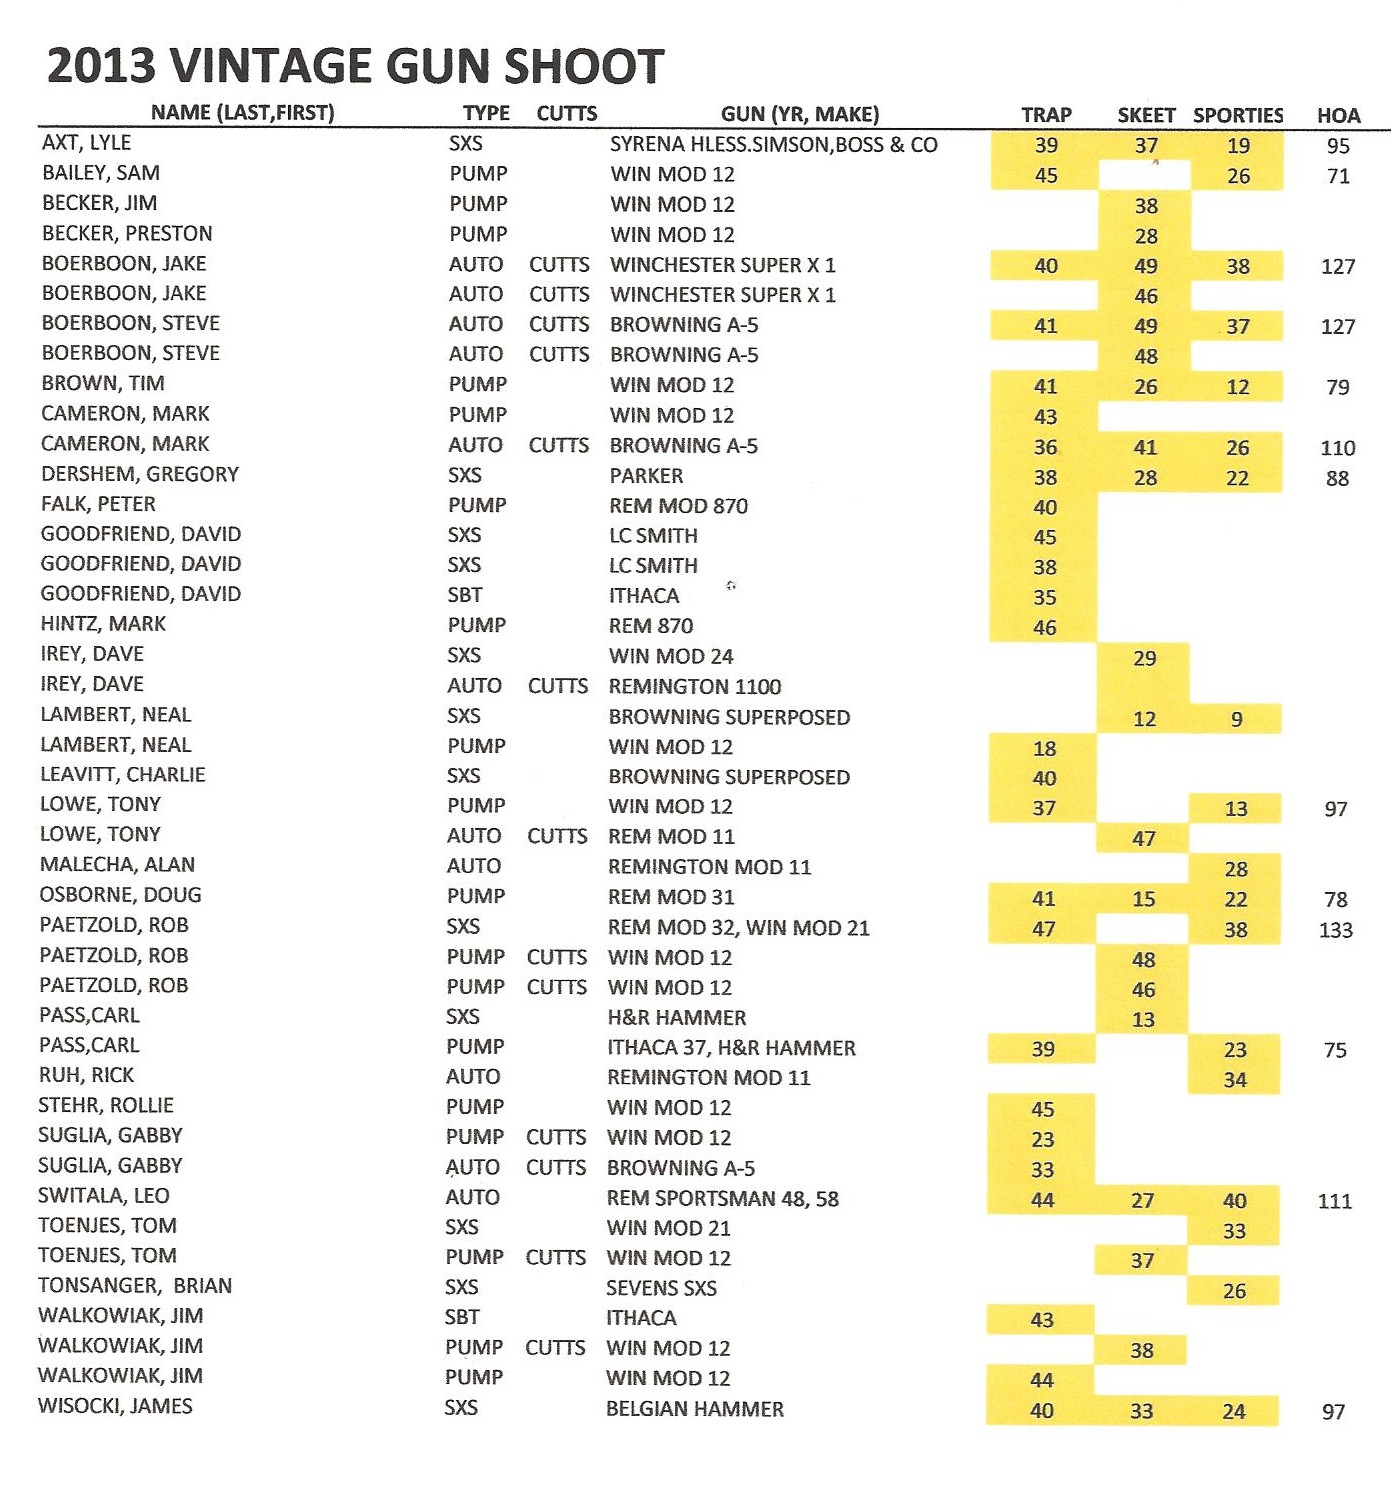 2013 VINTAGE GUN RESULTS 2